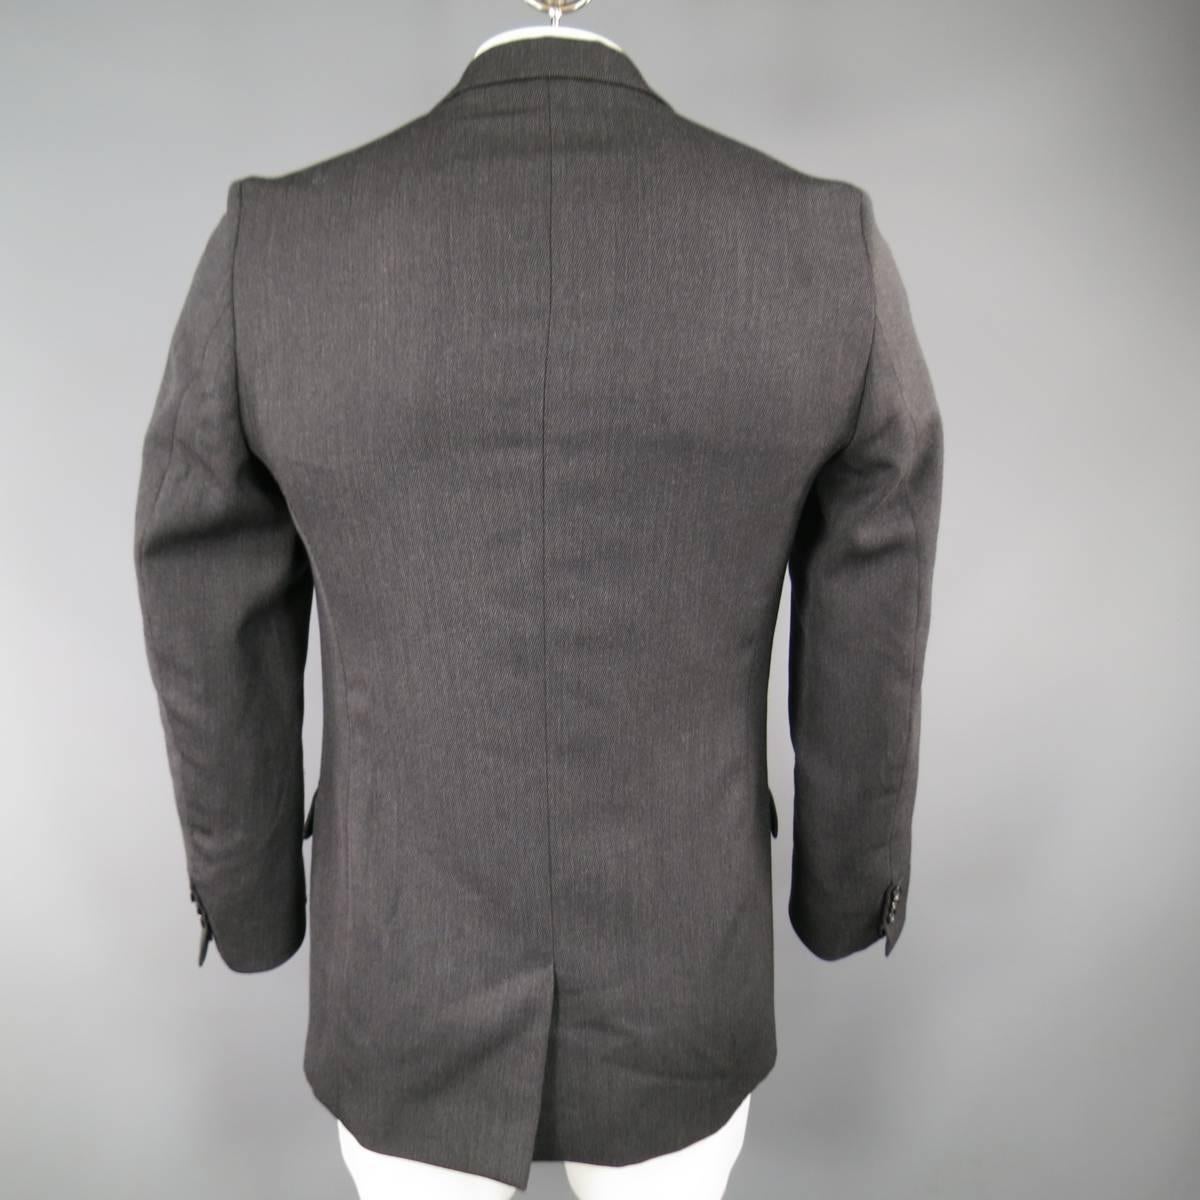 Black Maison Martin Margiela Men's Sport Coat Charcoal Wool Jacket, 40 Regular 